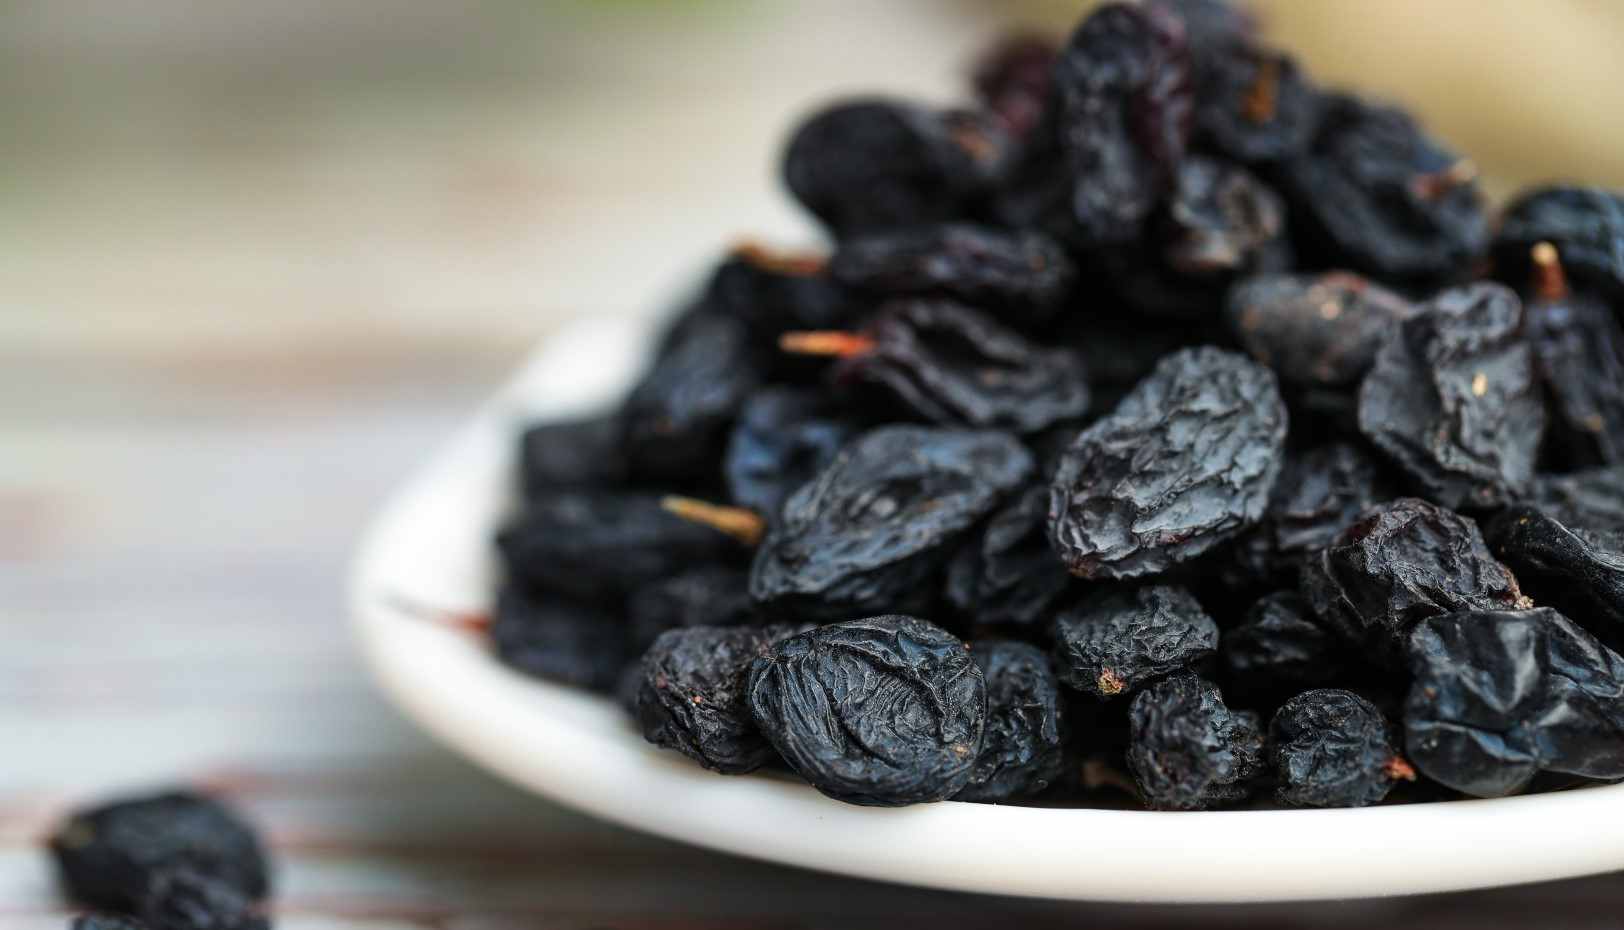 How to eat black raisins during pregnancy